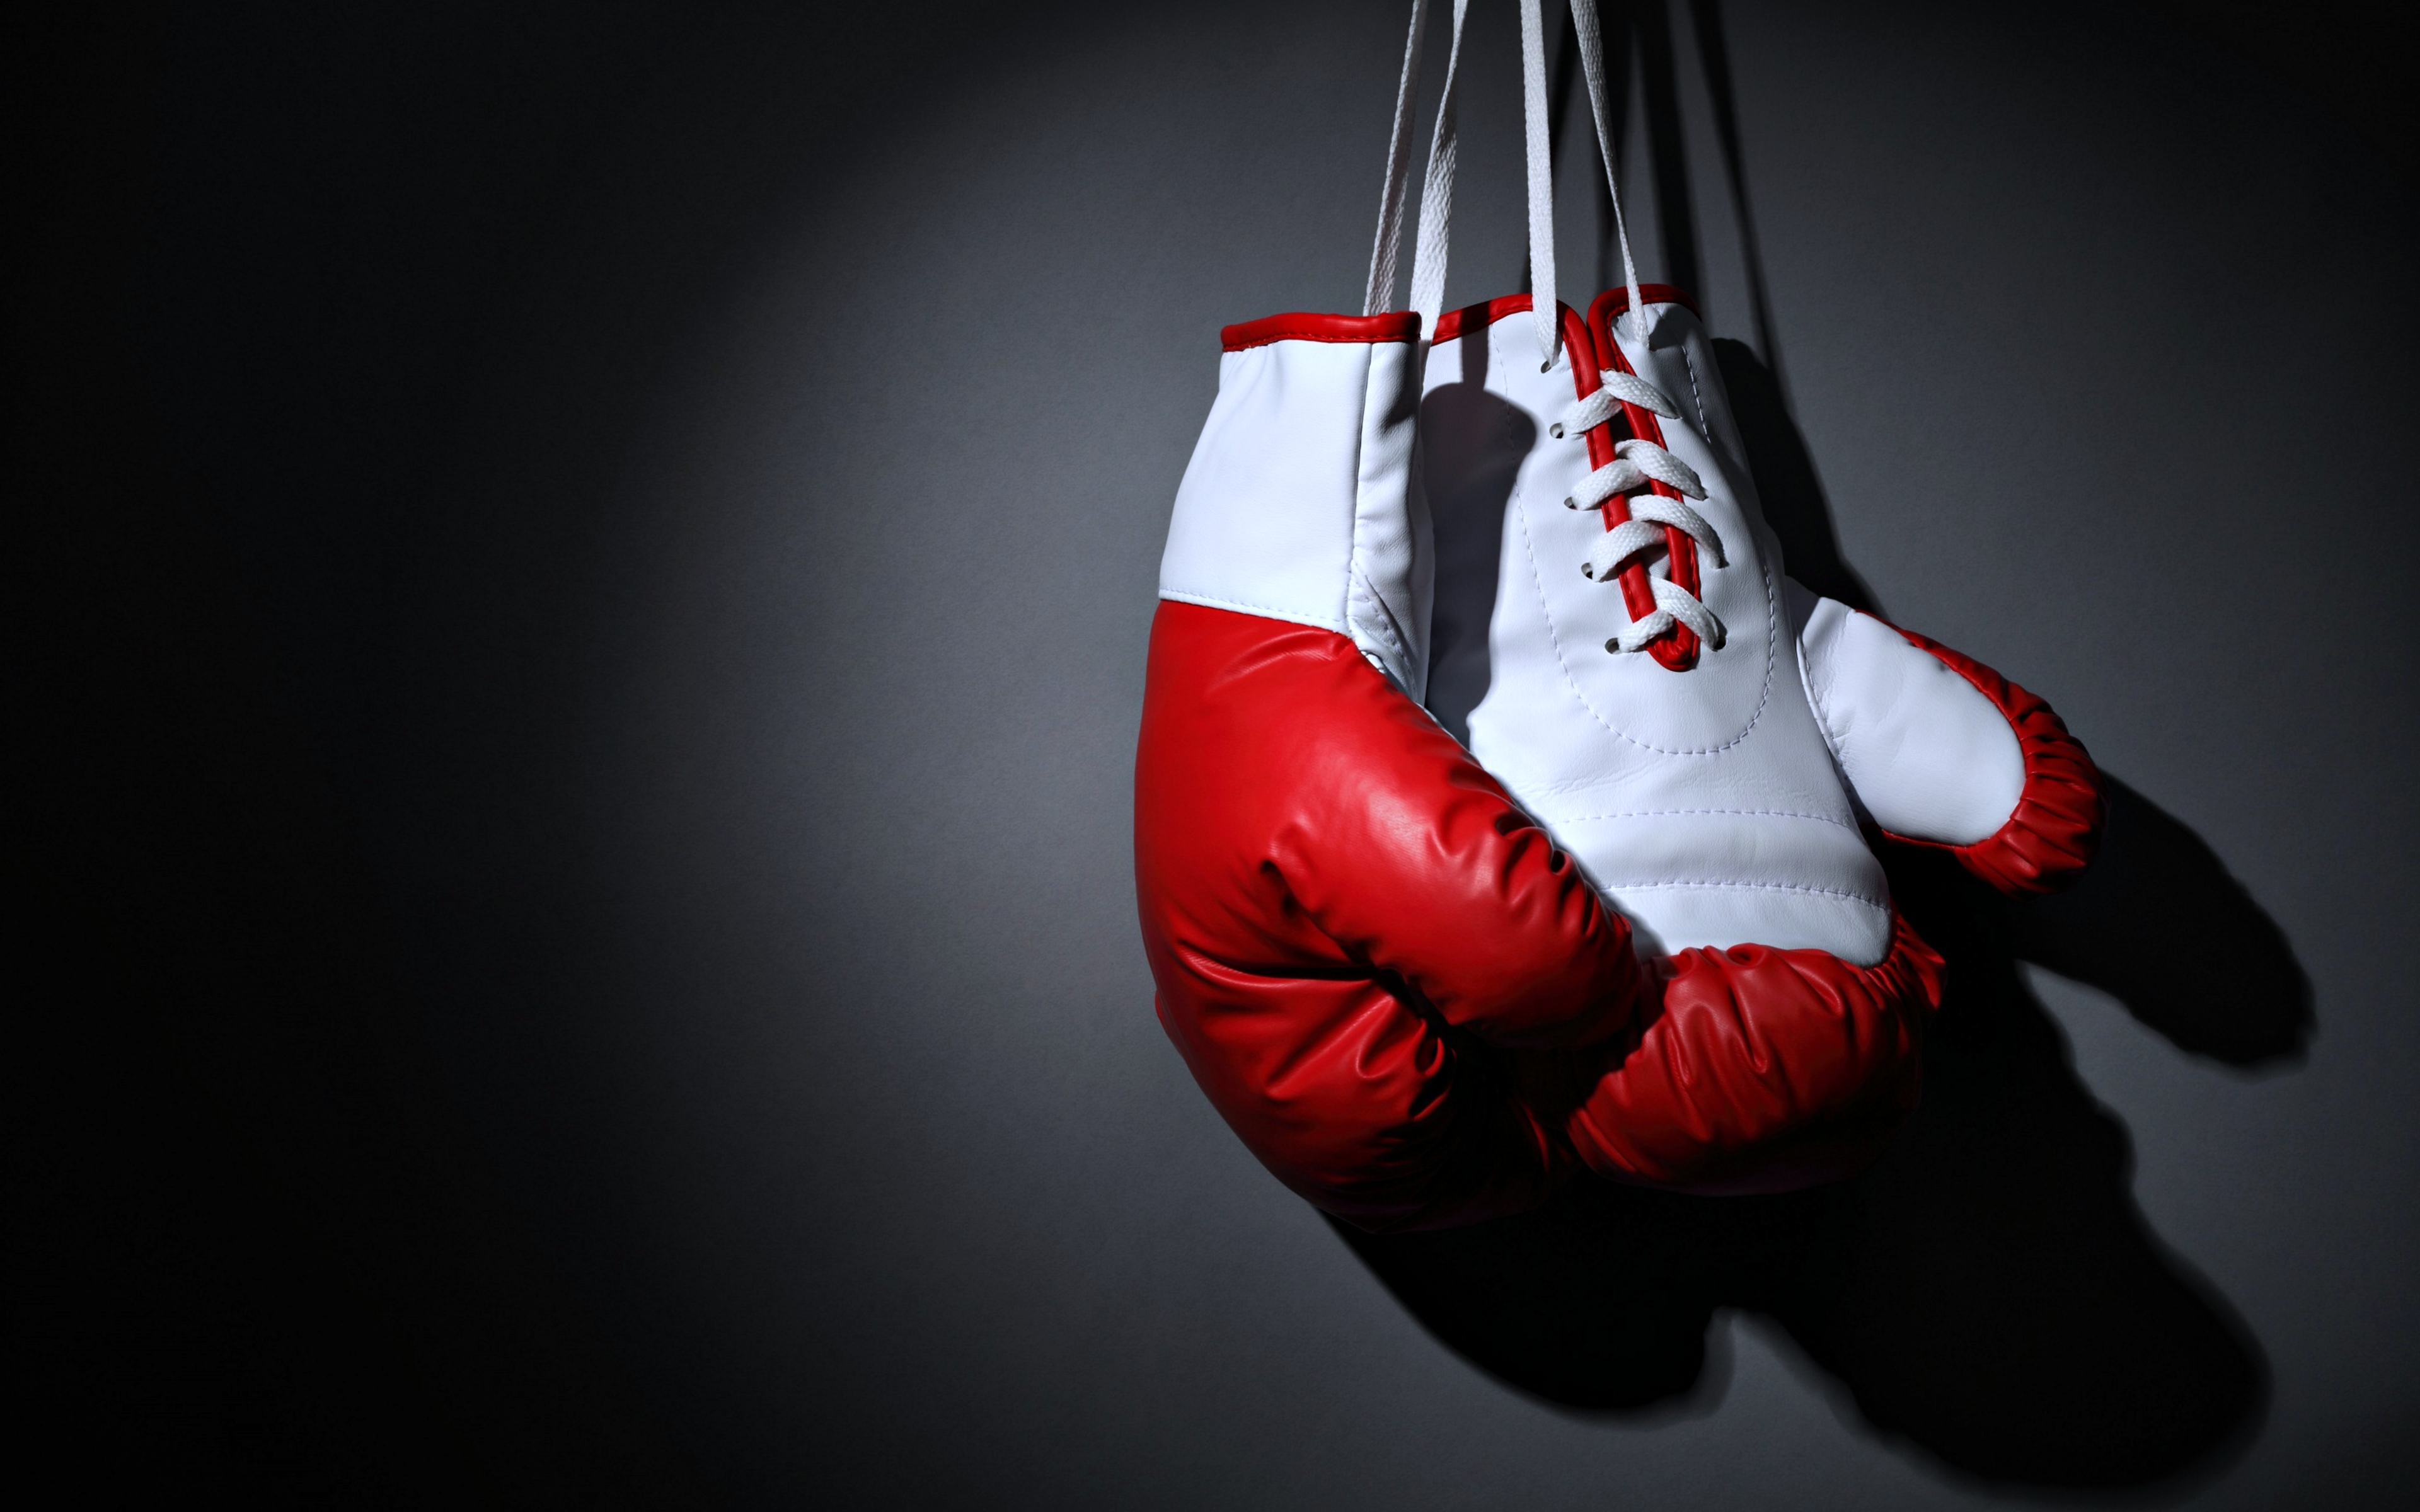 Political Science Undergraduate Program Student Aygün Gençay Became Champion at Kick Boxing Championships